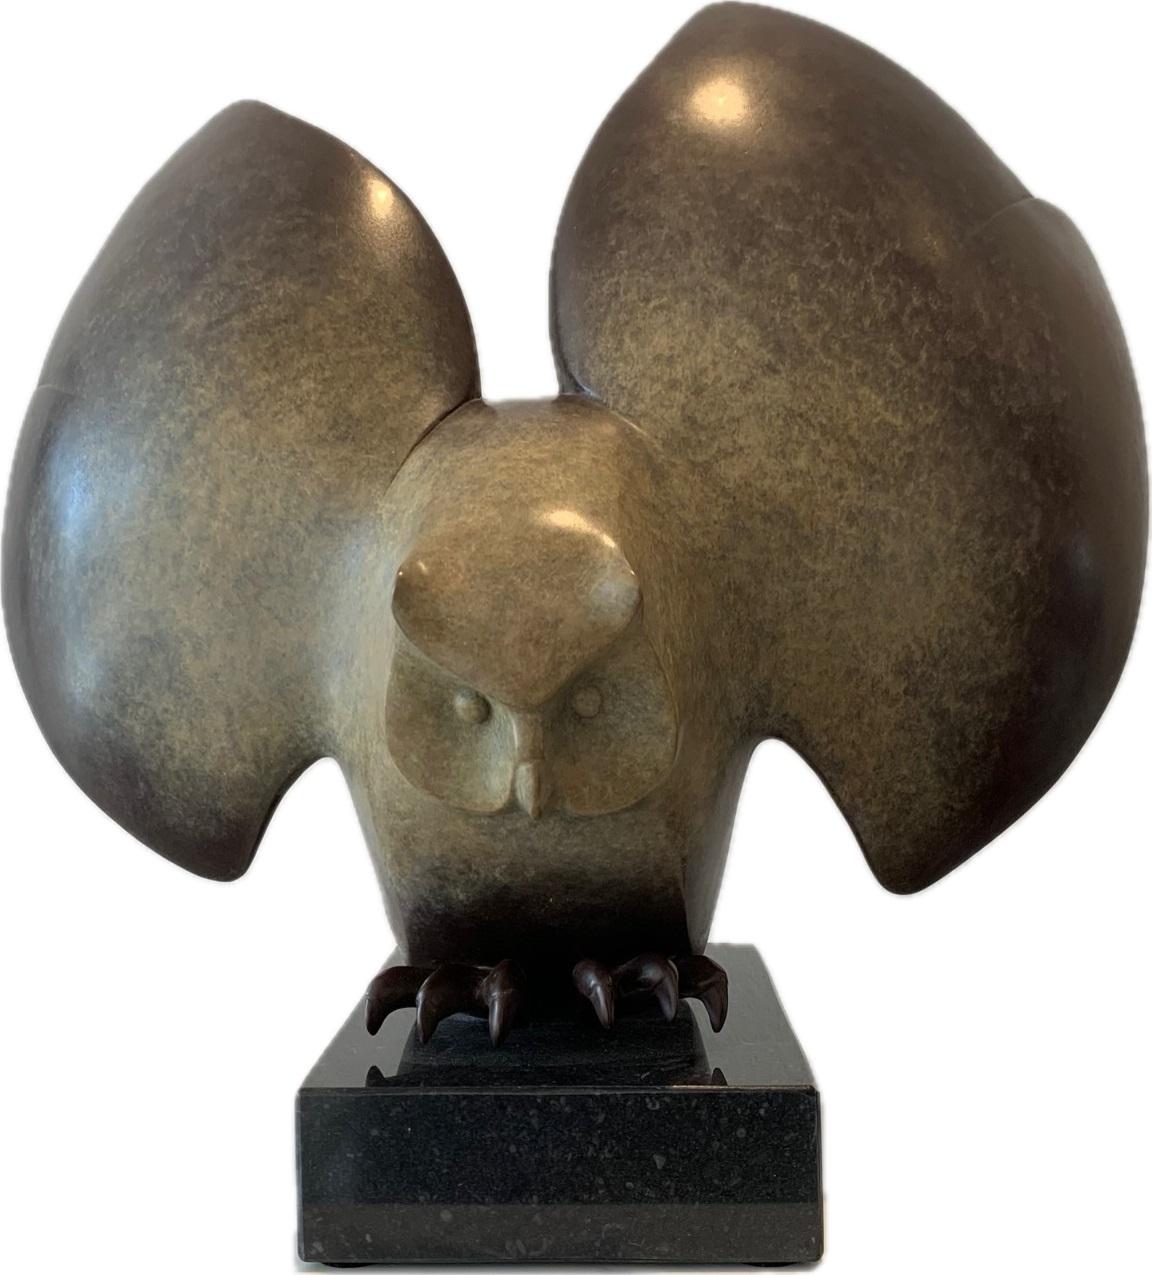 Evert den Hartog Figurative Sculpture - Landende Uil no. 3 Landing Owl Bronze Sculpture Limited Edition Special Patina